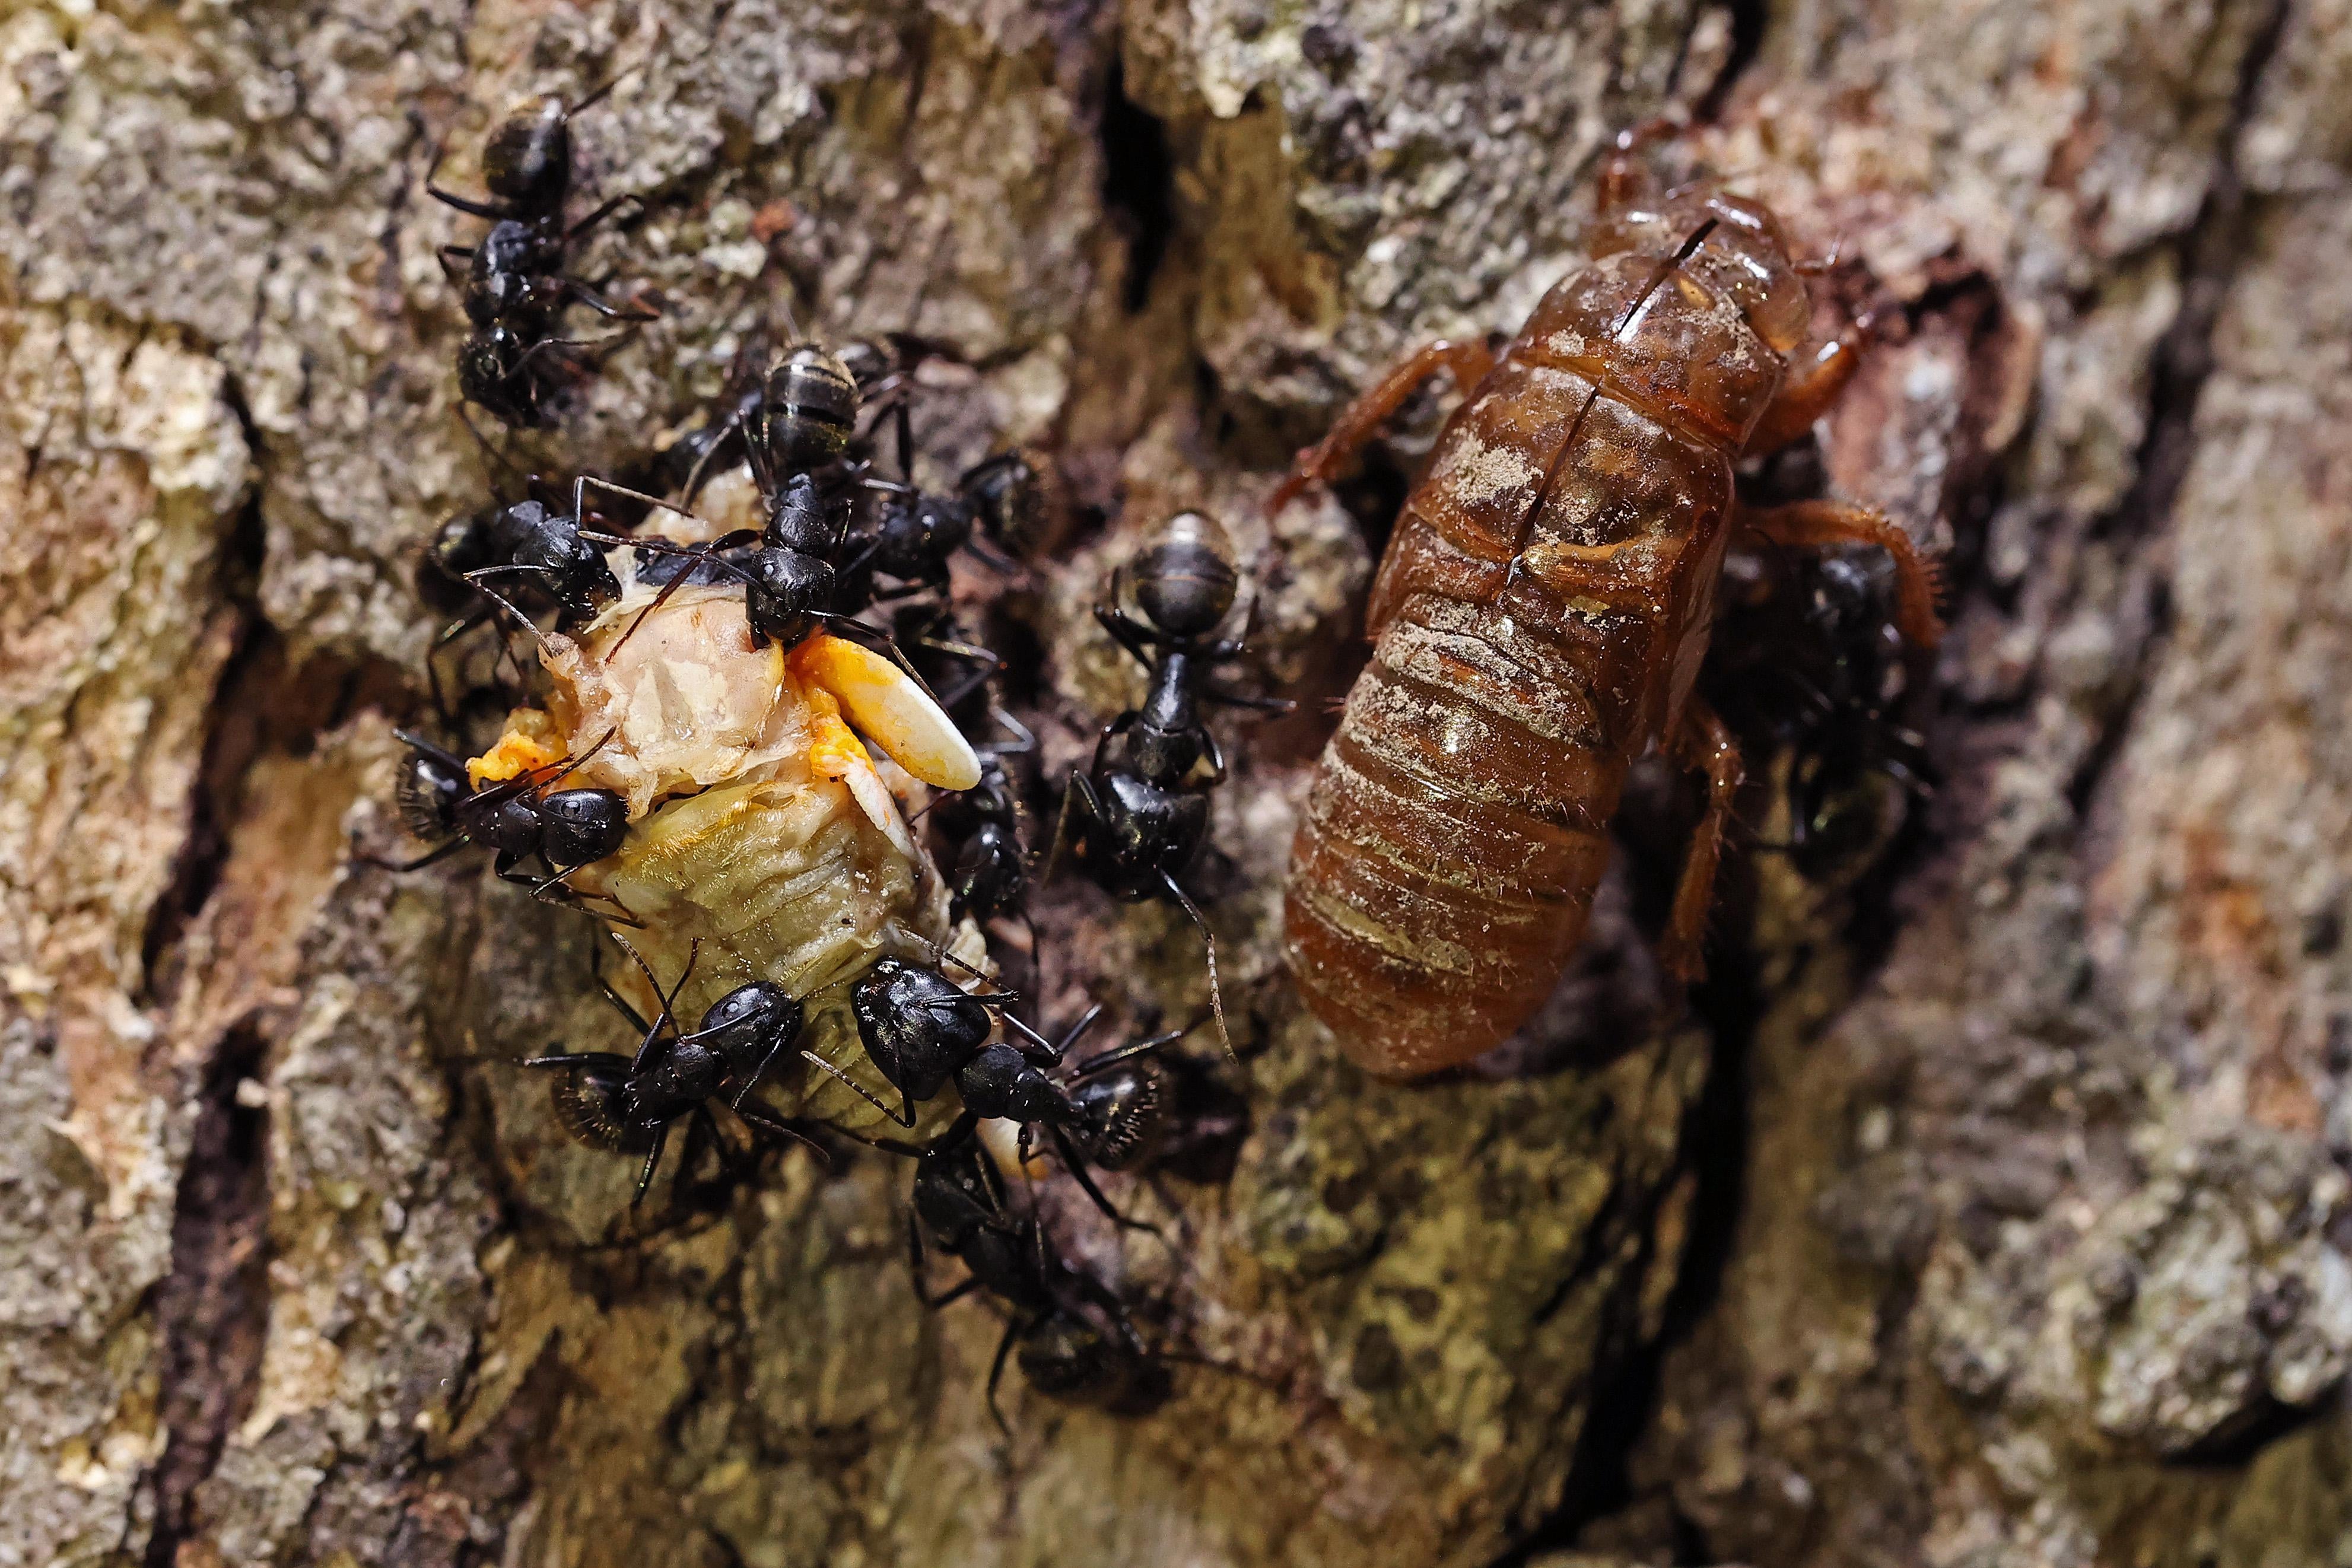 Carpenter ants tear apart the carcass of a Magicicada periodical cicada 